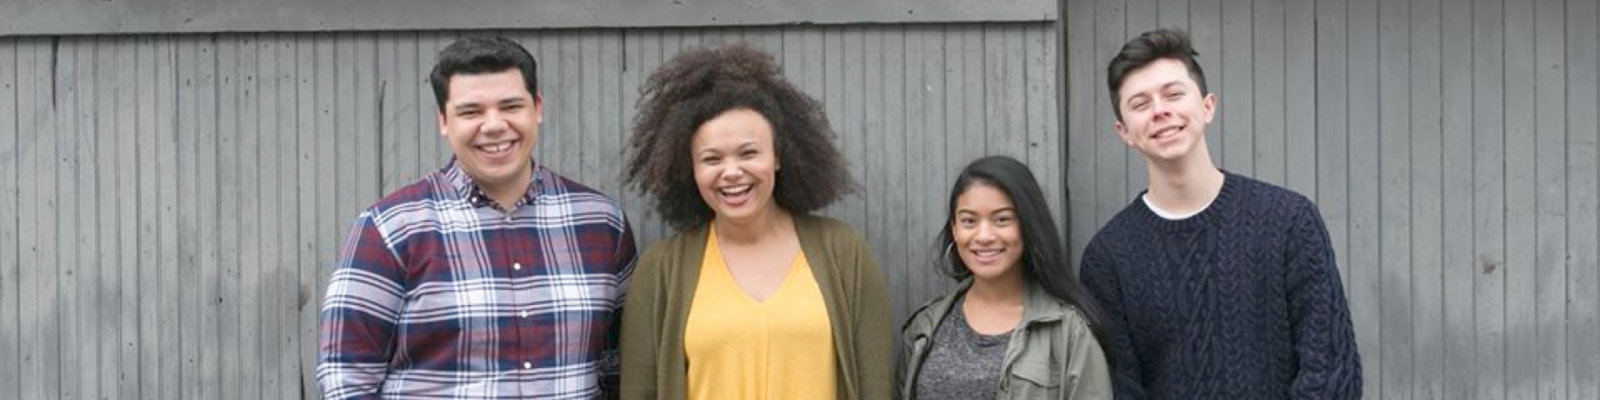 Website development placeholder image of 4 teenagers